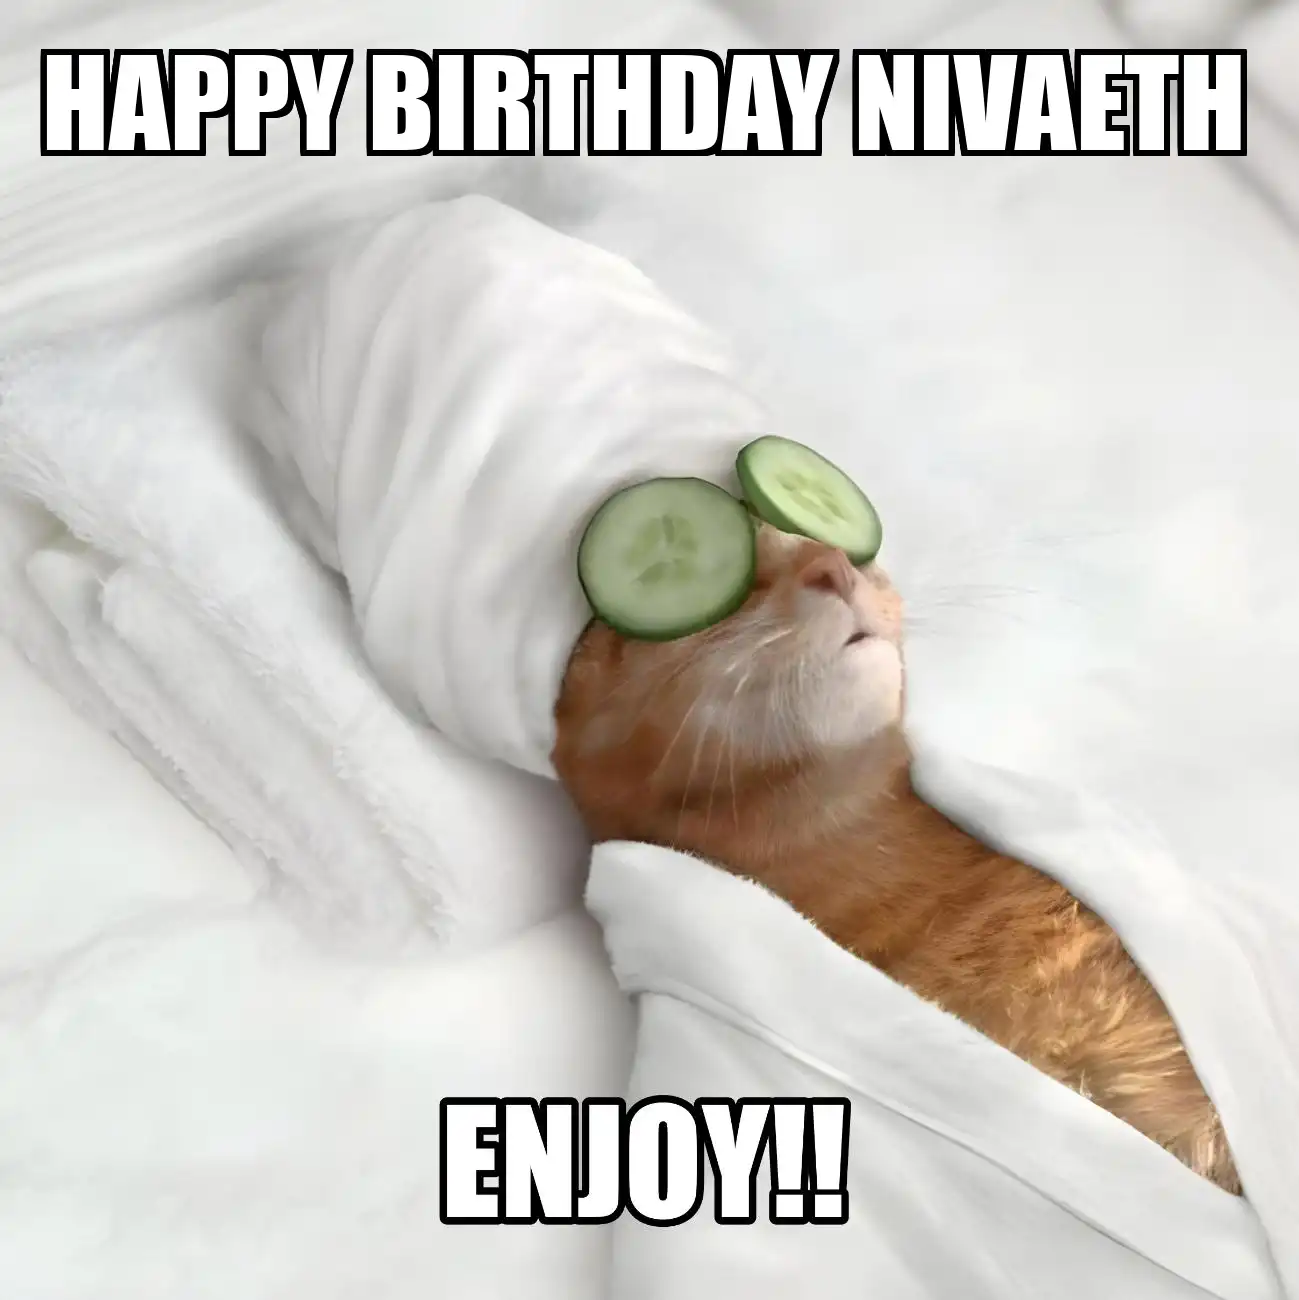 Happy Birthday Nivaeth Enjoy Cat Meme